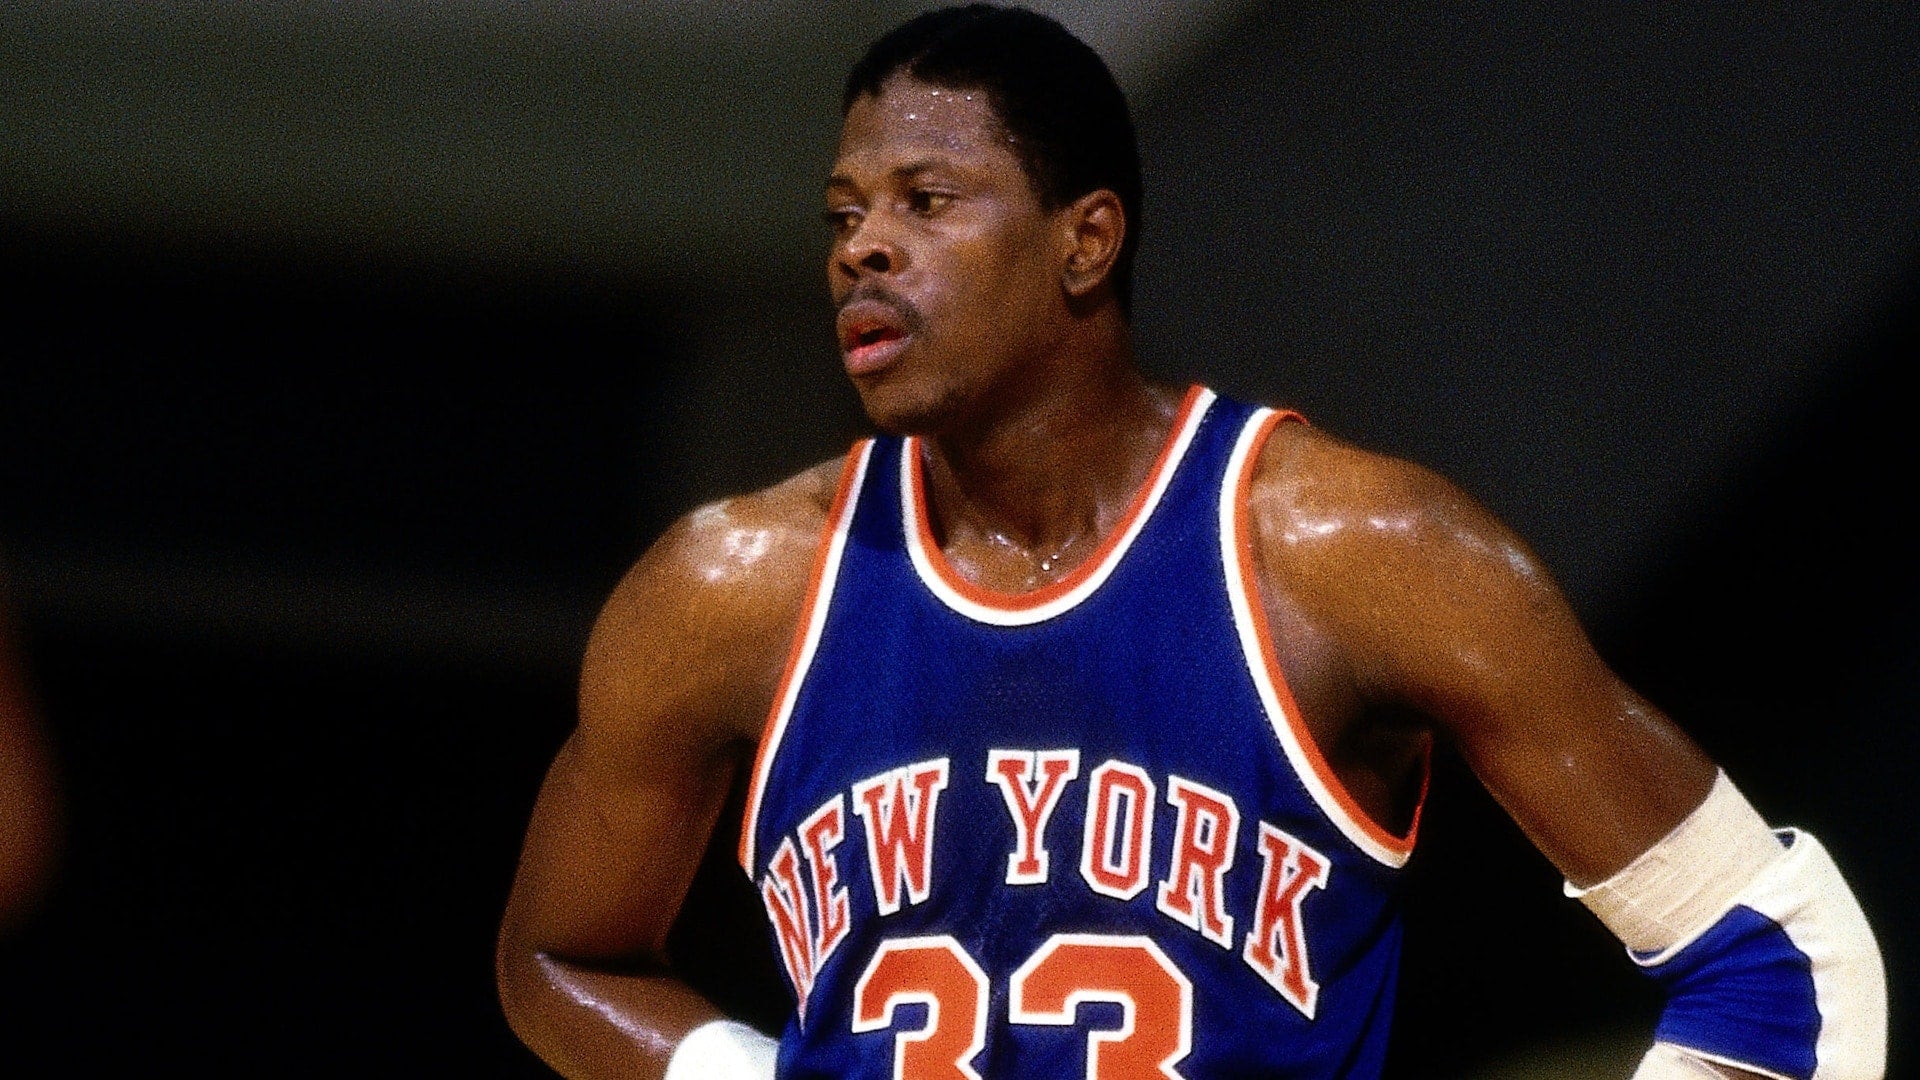 Patrick Ewing New York Knicks Mitchell & Ness 1991-92 Hardwood